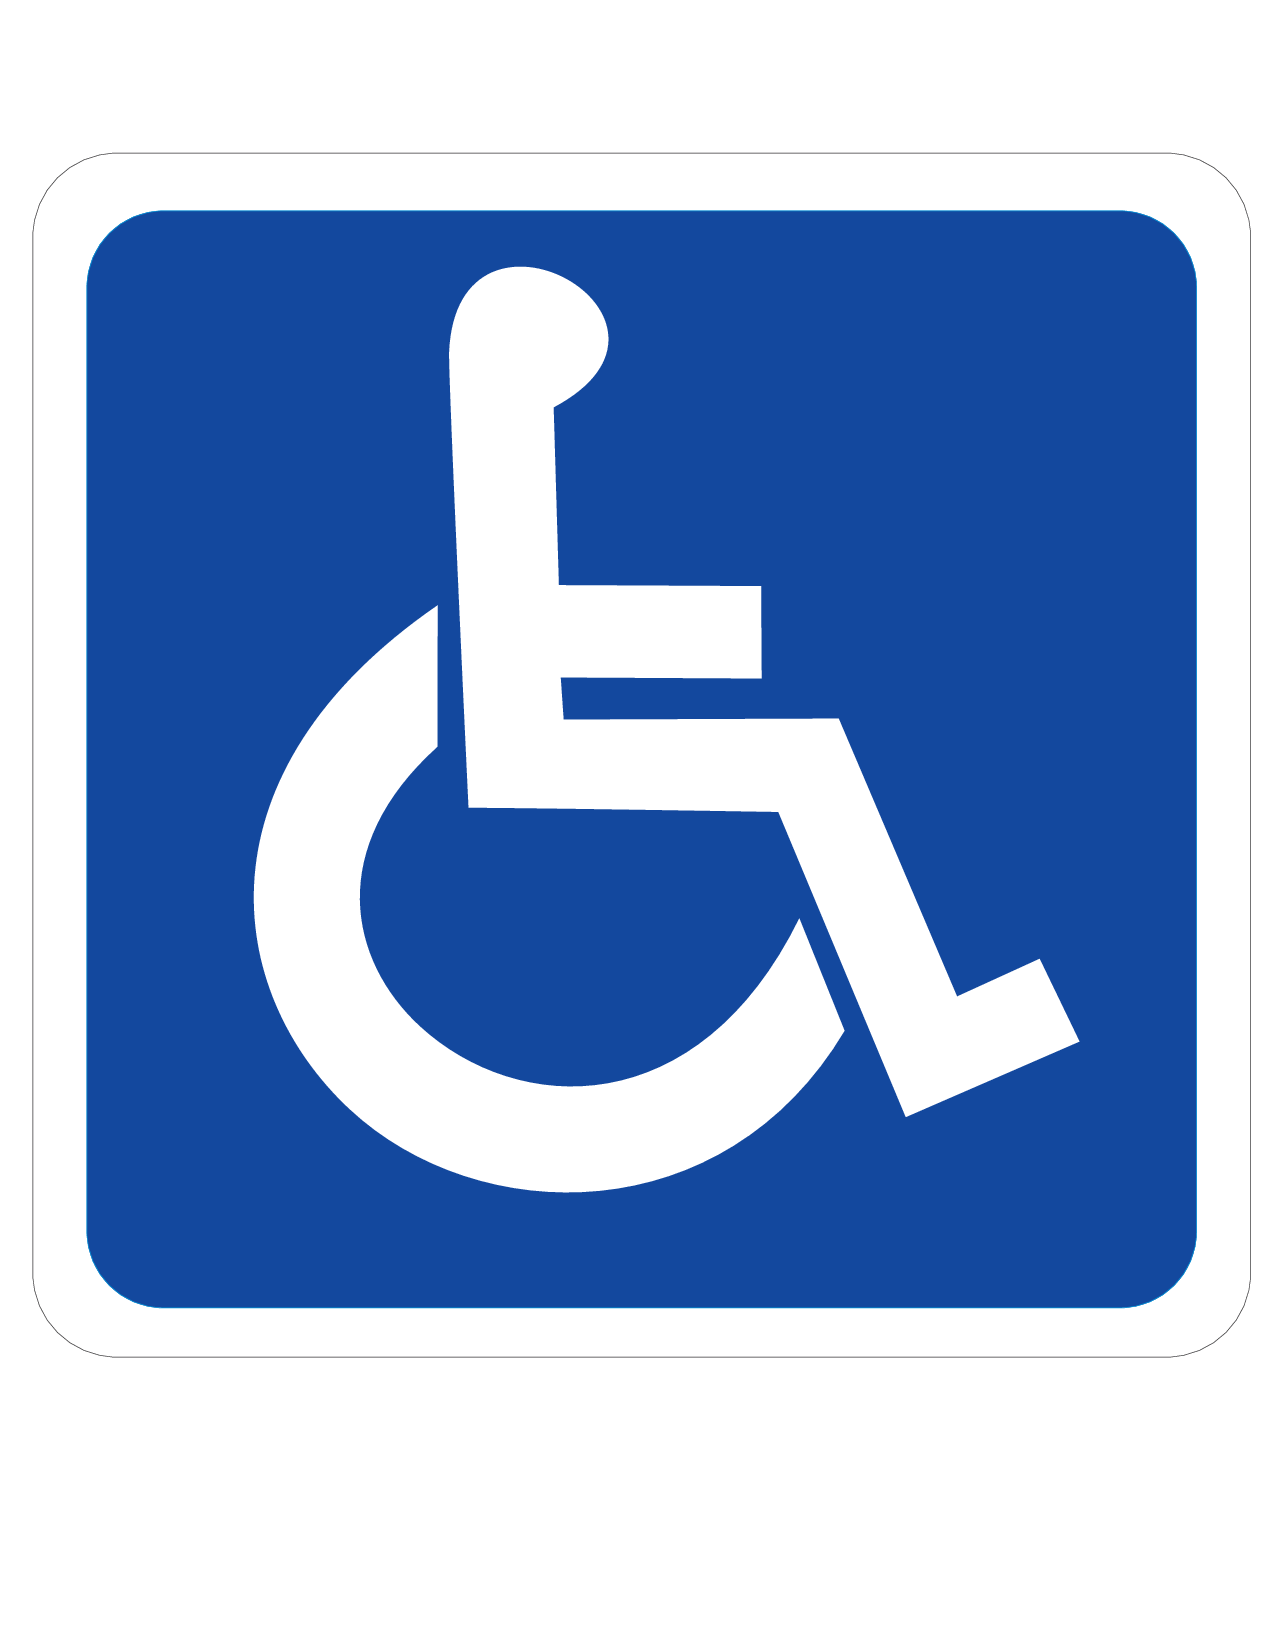 Free Printable Handicap Sign, Download Free Printable Handicap Sign png